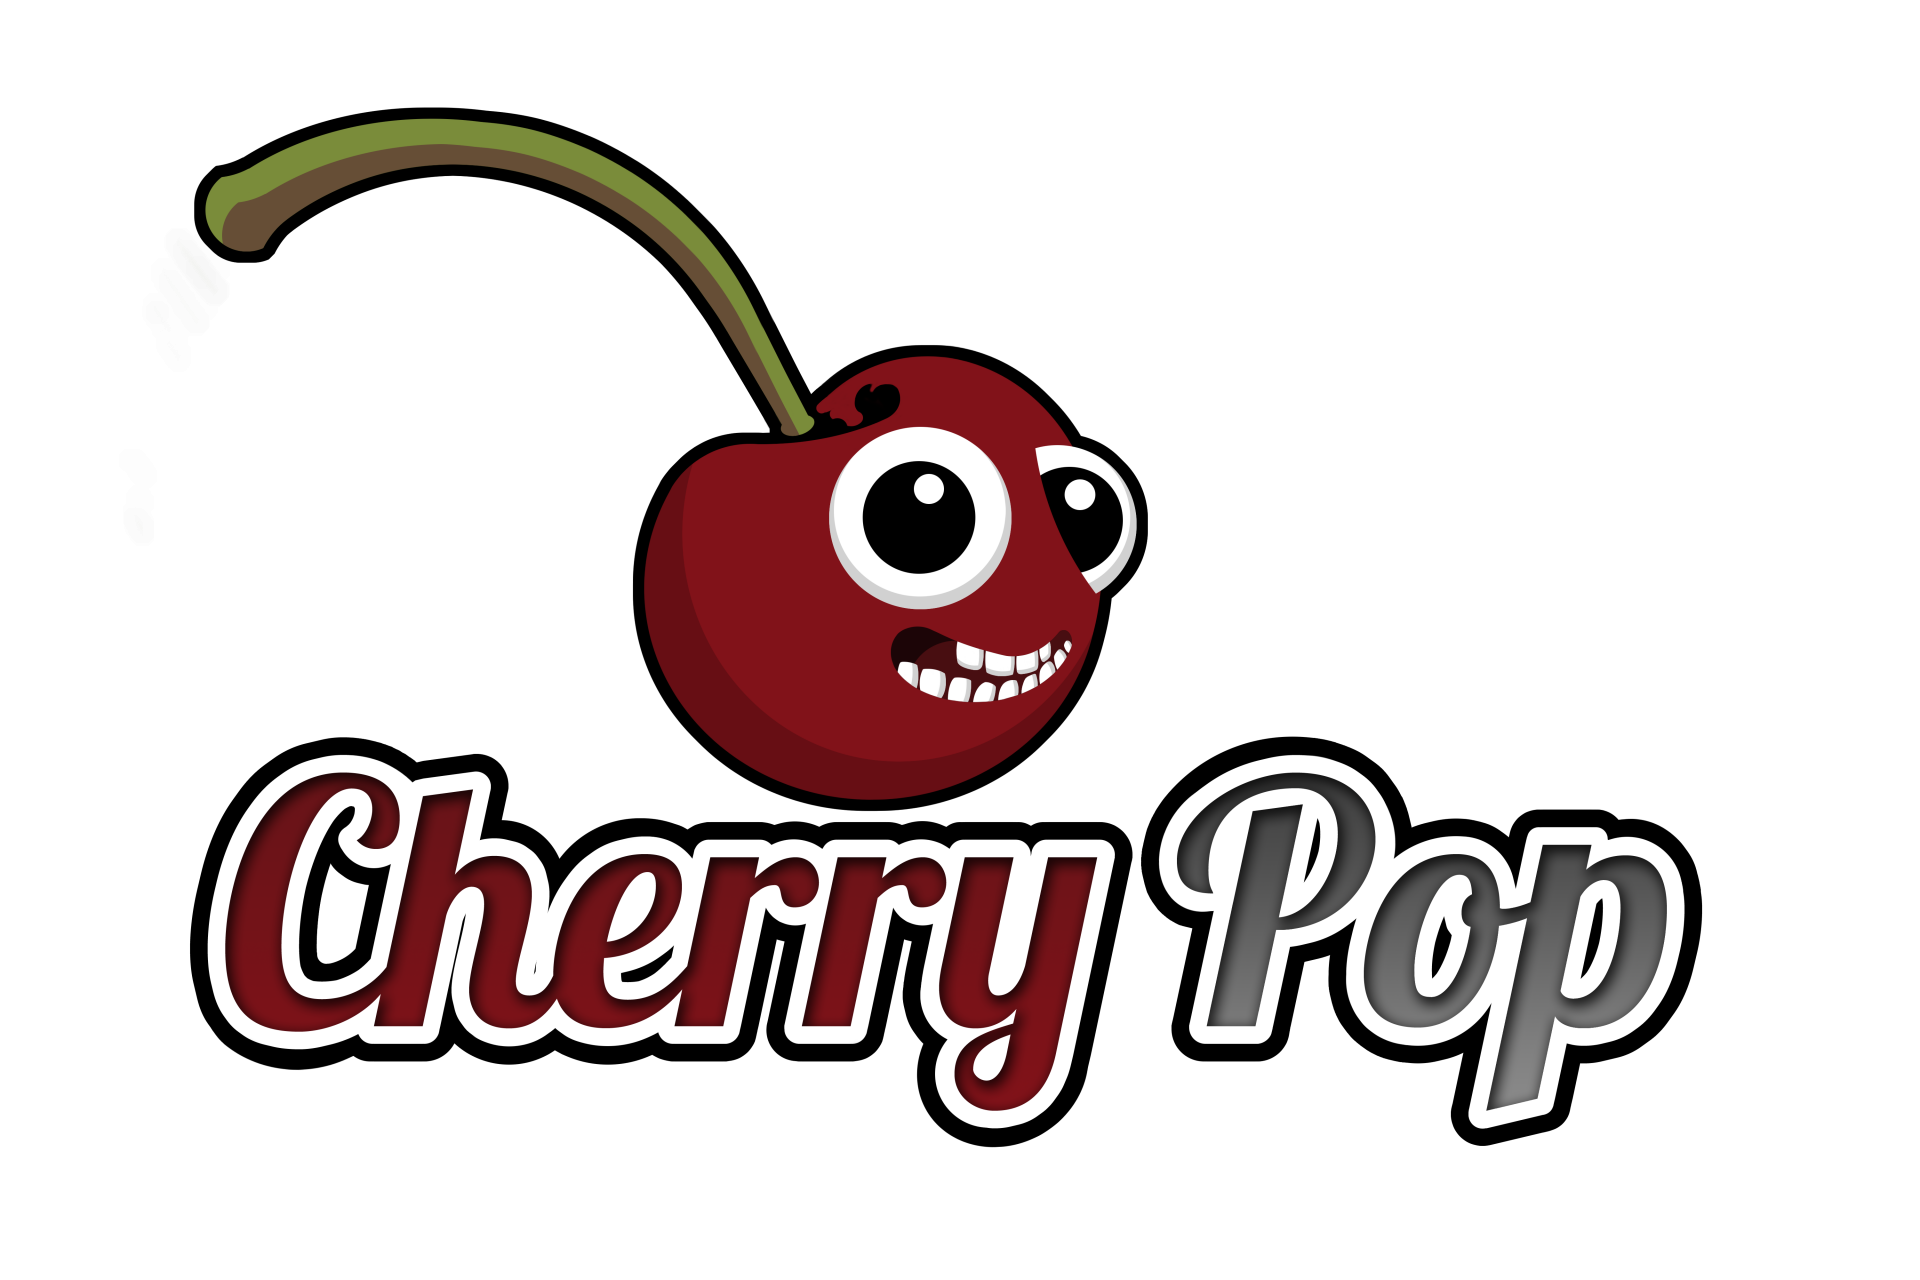 Cherrypopgames